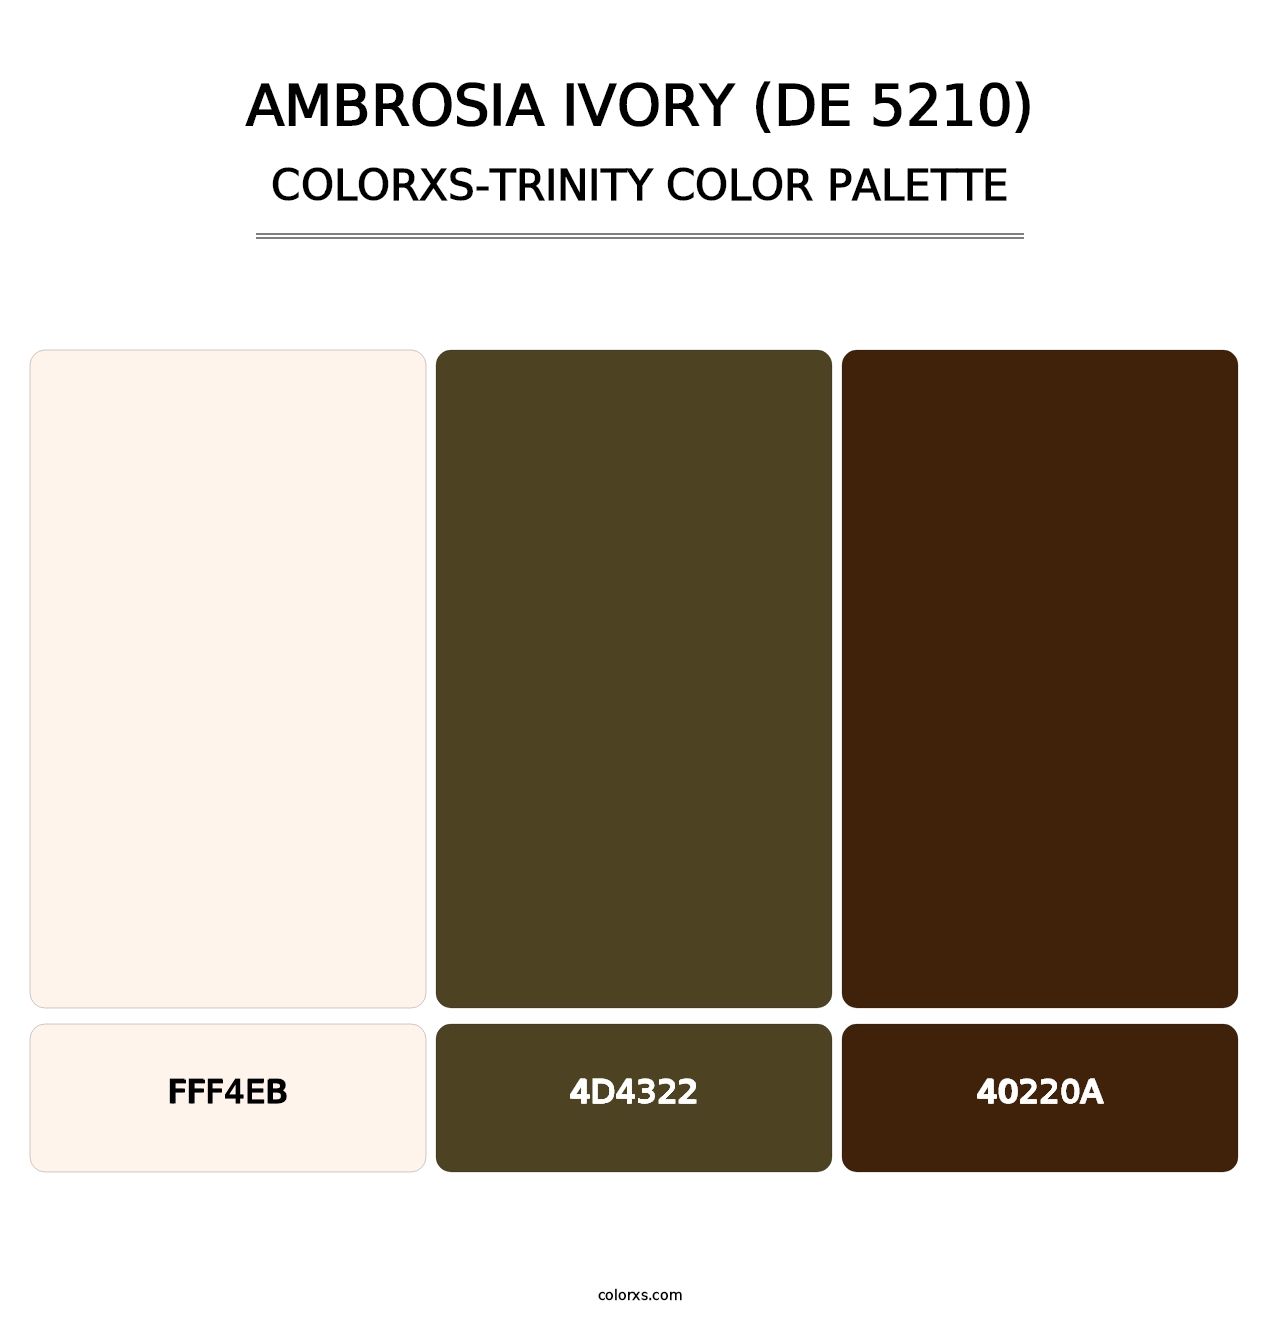 Ambrosia Ivory (DE 5210) - Colorxs Trinity Palette